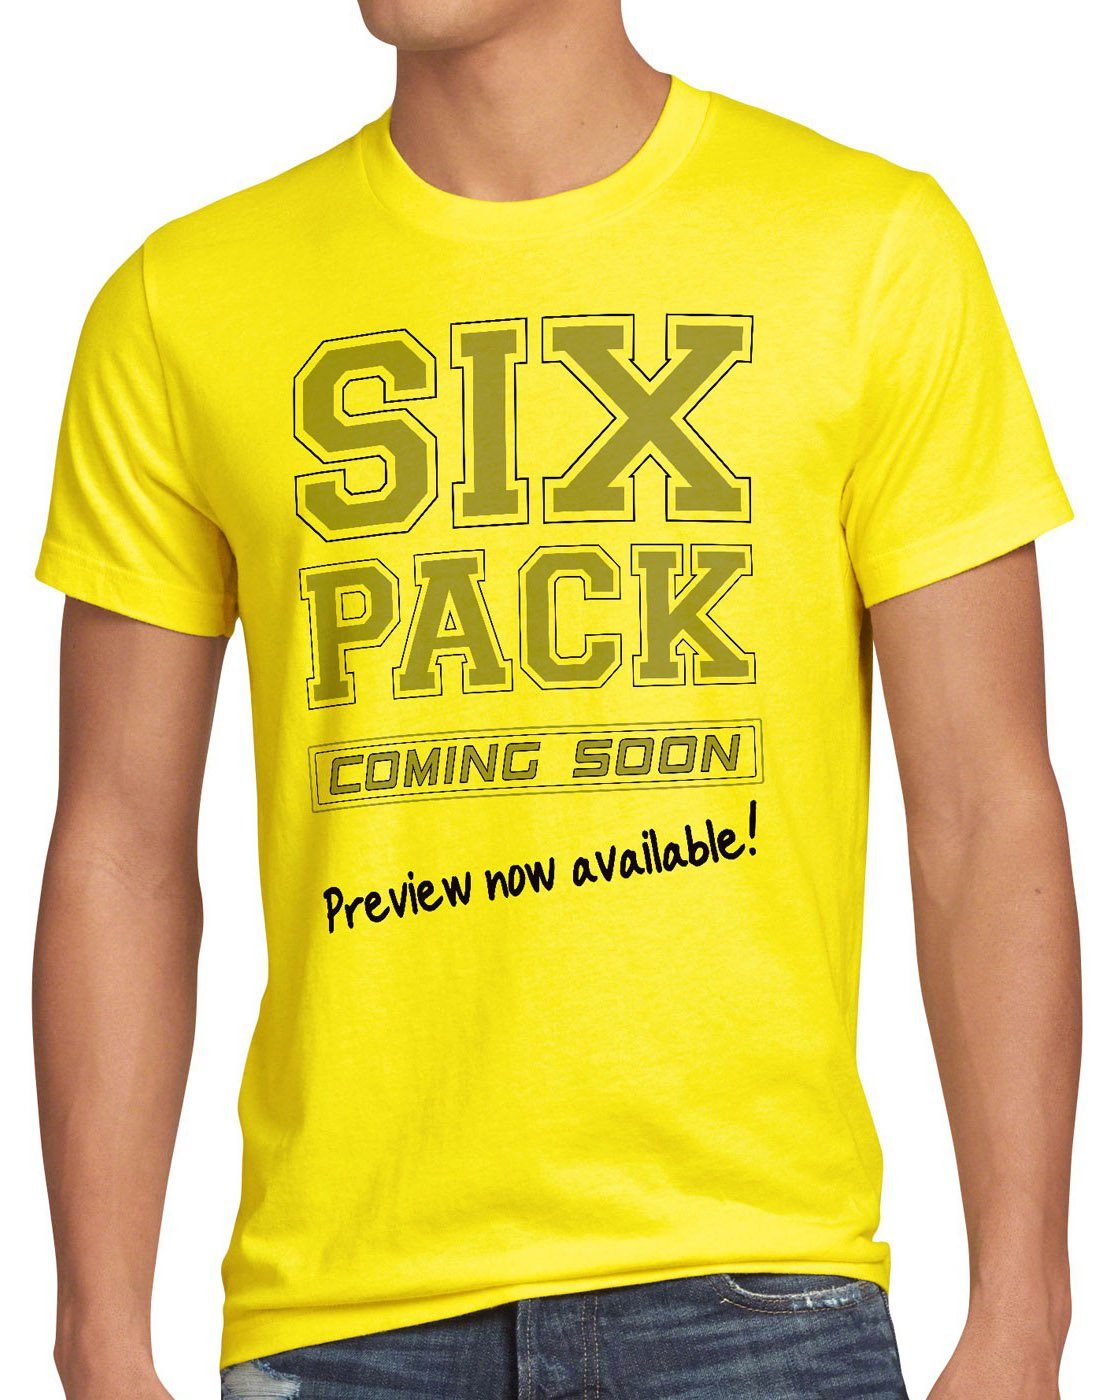 style3 Print-Shirt Herren T-Shirt Sixpack Spruchshirt Spruch bauch Fun gelb coming bier sprüche Funshirt